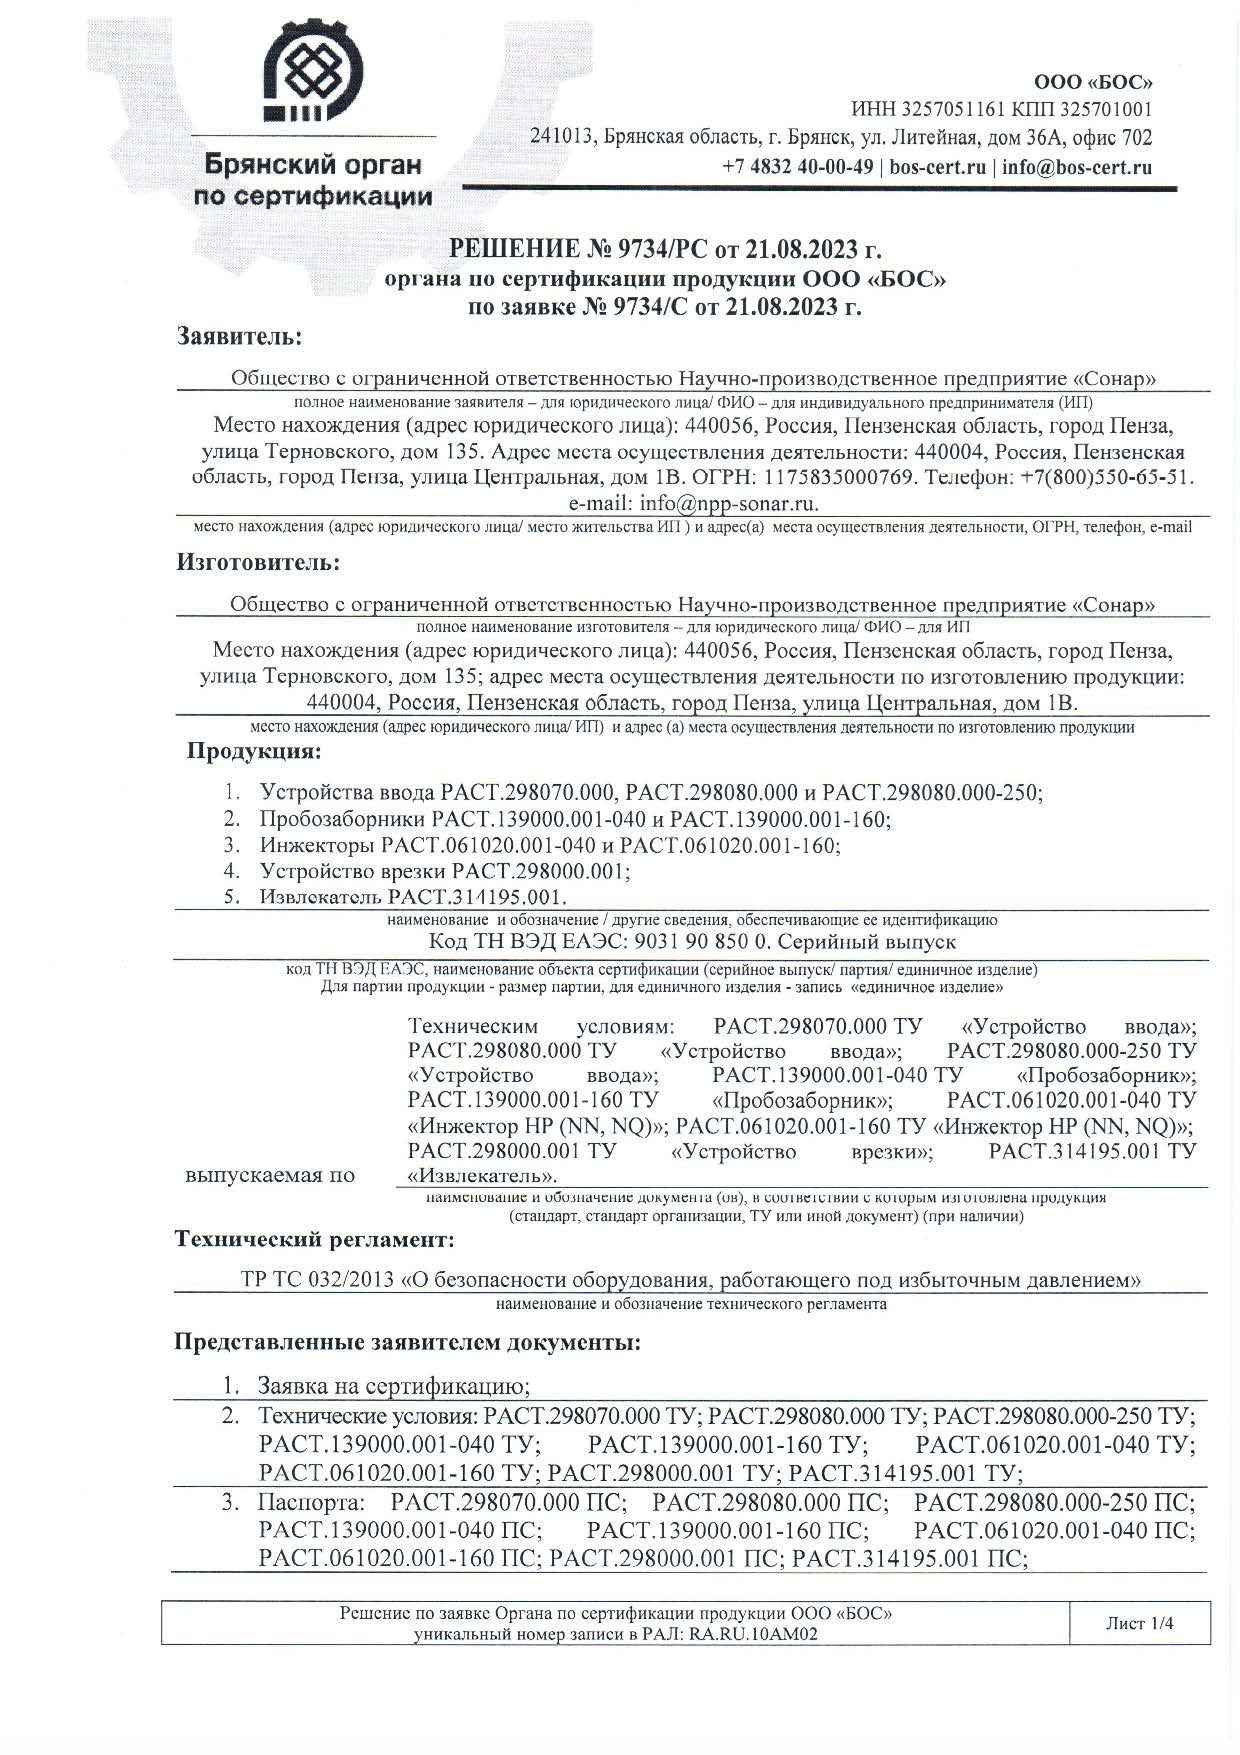 Решение № 9734 РС. Отказ в проведении сертификации по ТР ТС 032 2013